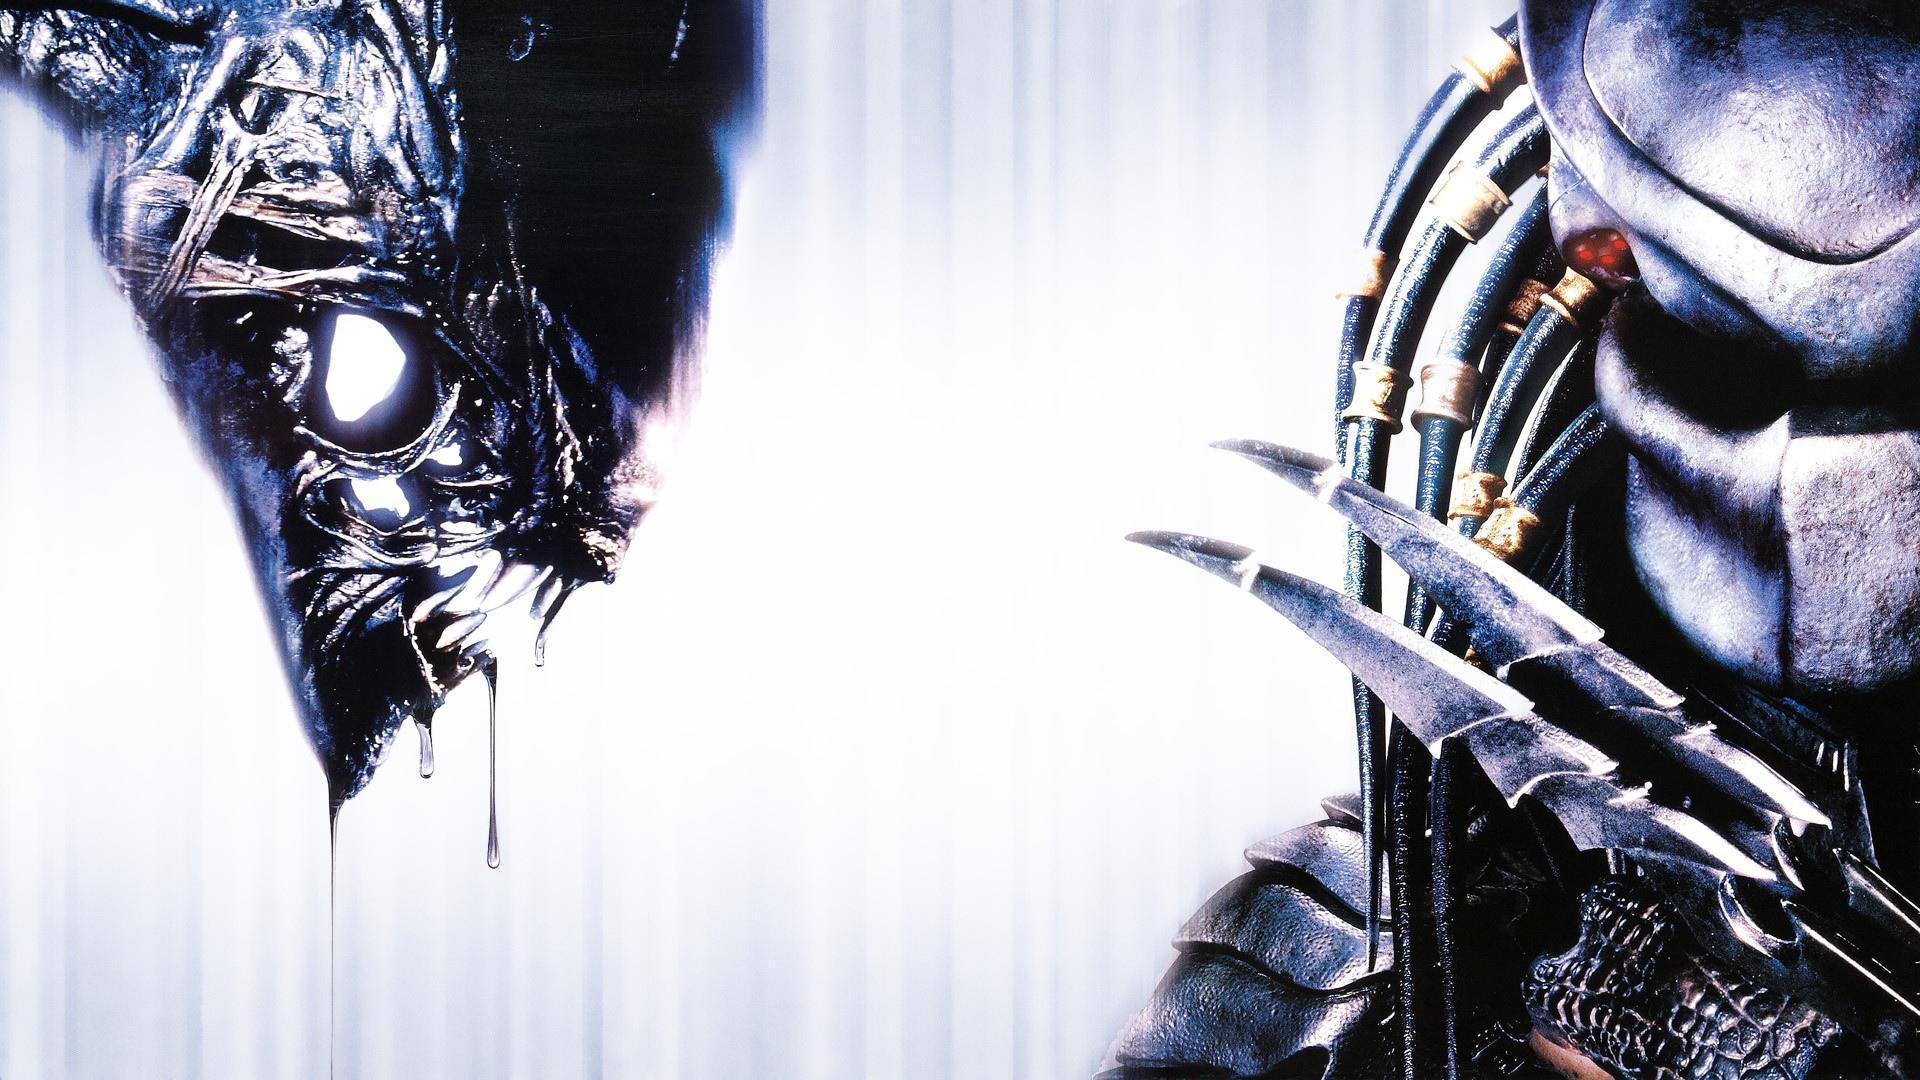 Aliens Vs. Predator HD Wallpaper and Background Image